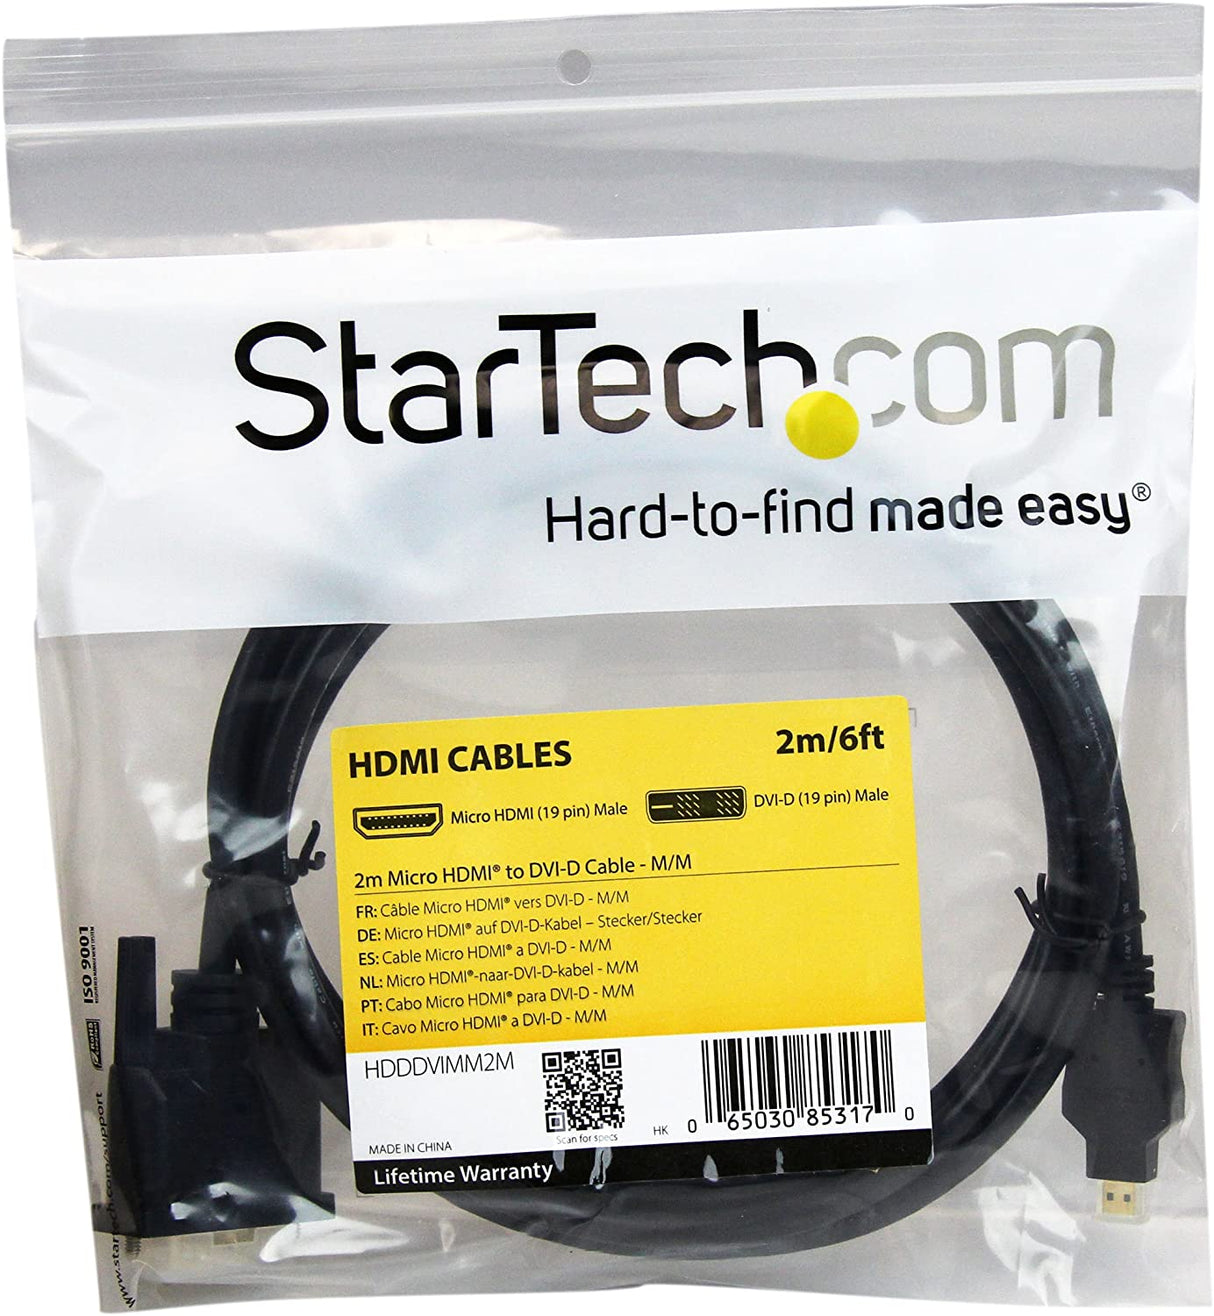 StarTech.com 2m Micro HDMI to DVI-D Cable - M/M - 2 meter Micro HDMI to DVI Cable - 19 pin HDMI (D) Male to DVI-D Male - 1920x1200 Video (HDDDVIMM2M),Black,6 ft / 2m 6 ft / 2m Micro HDMI to DVI